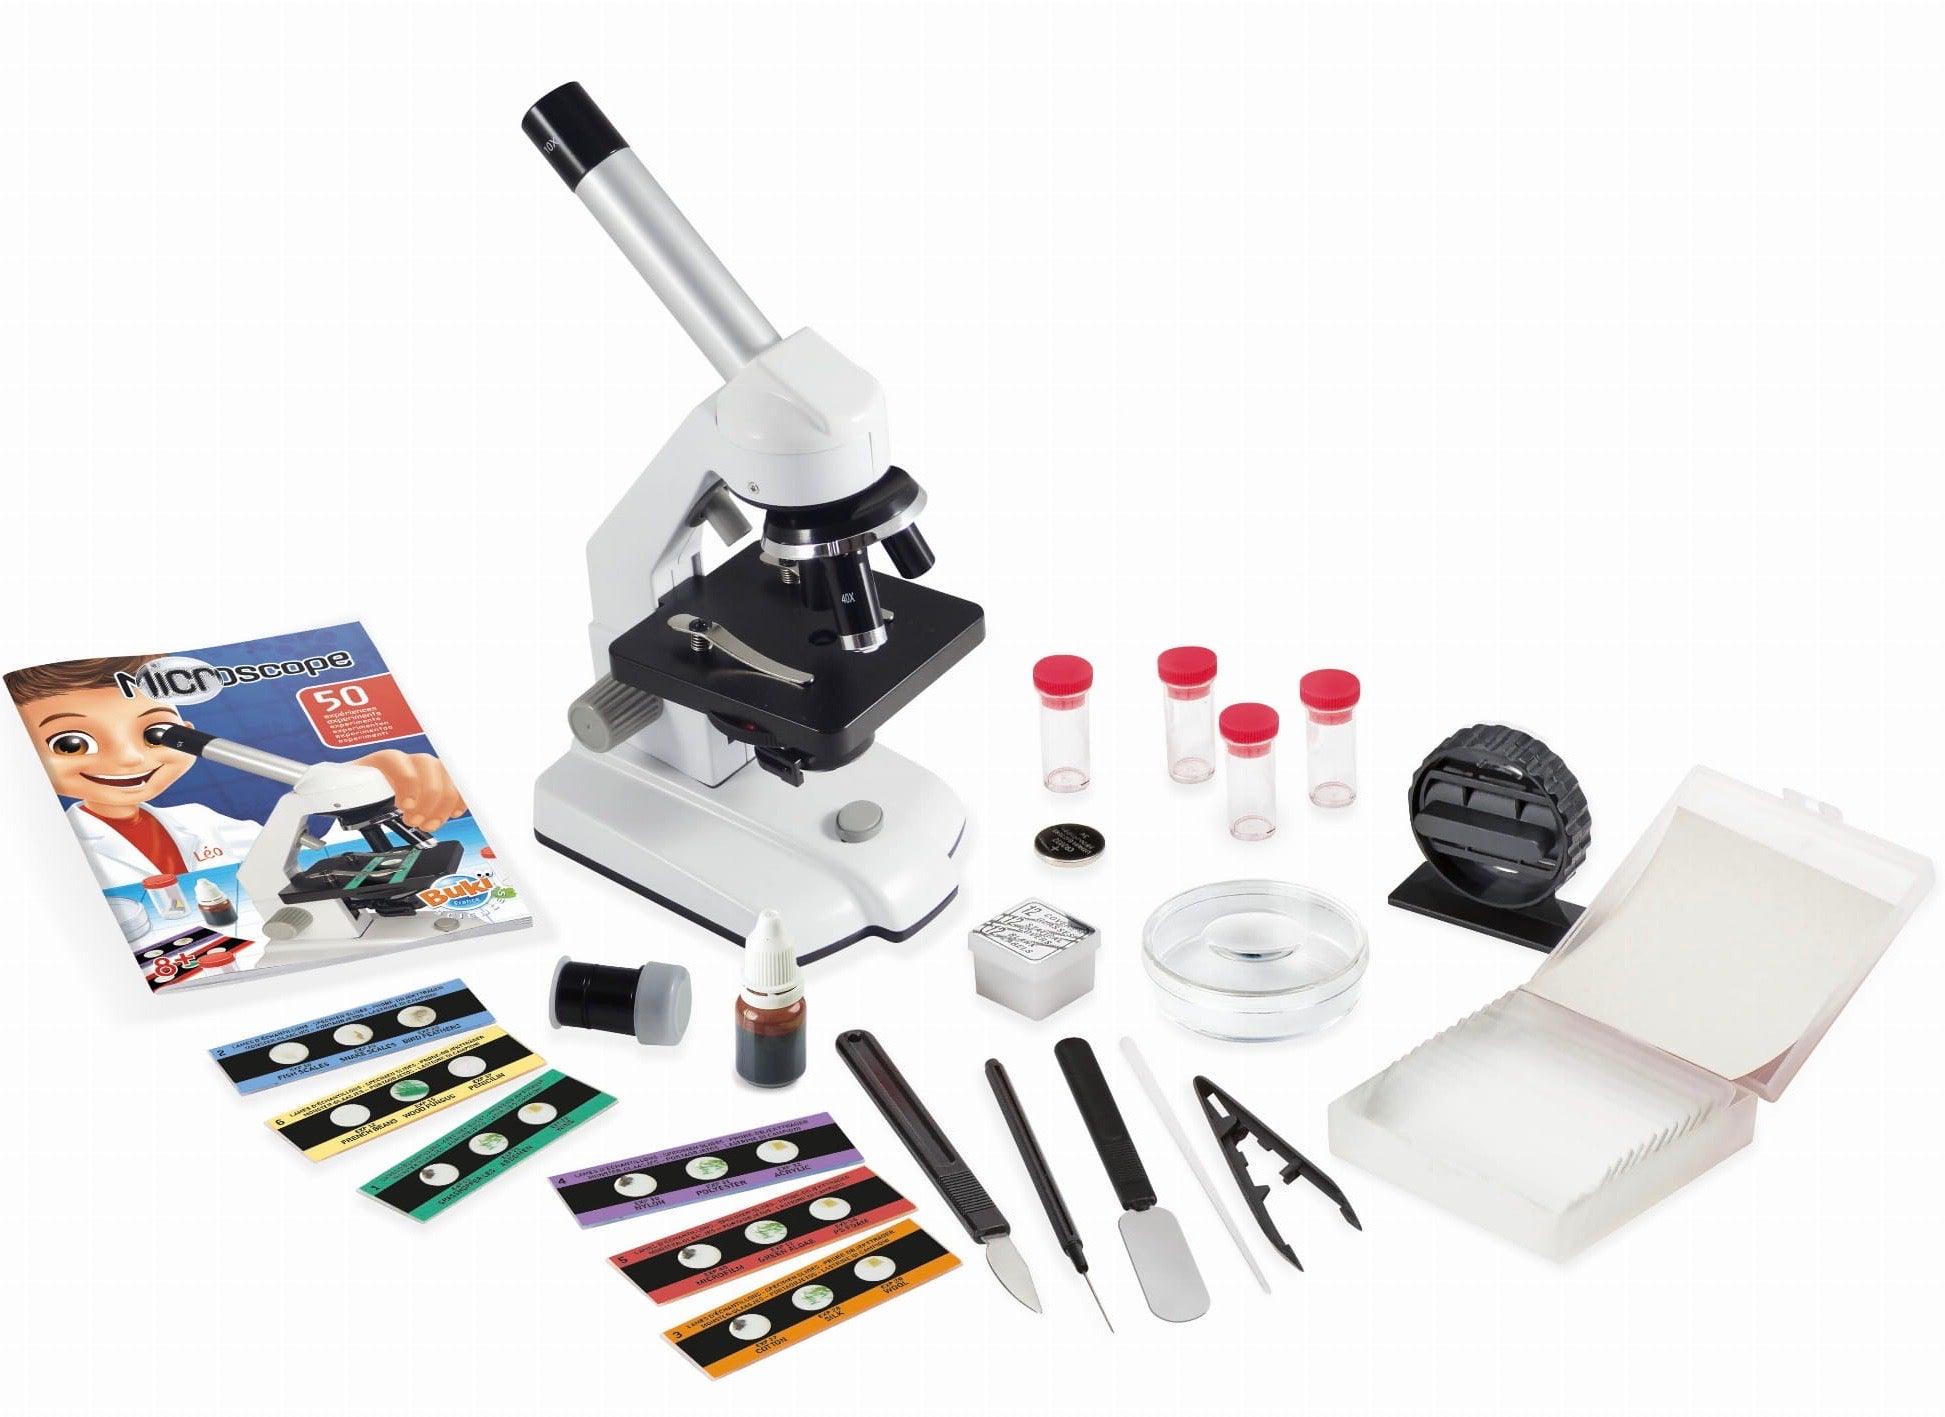 Buki: mikroskop 50 doświadczeń - Noski Noski